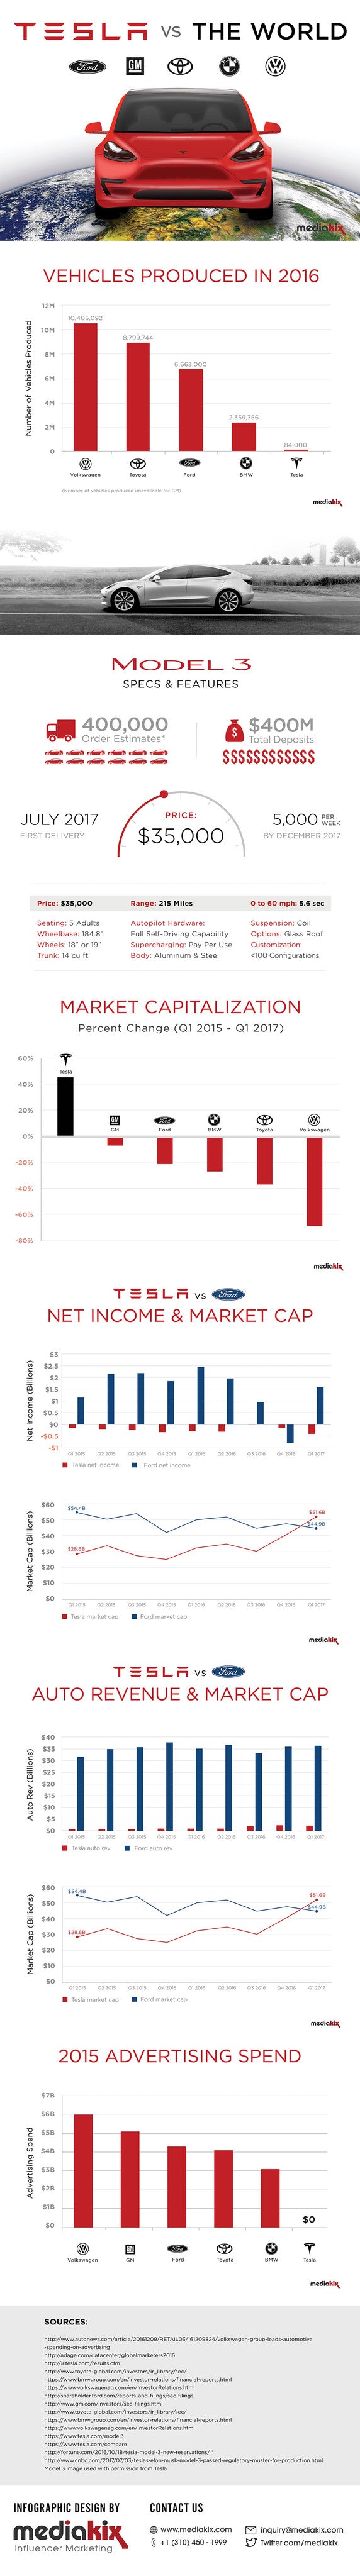 Tesla-model-3-market-cap-revenue-infographic1.jpg